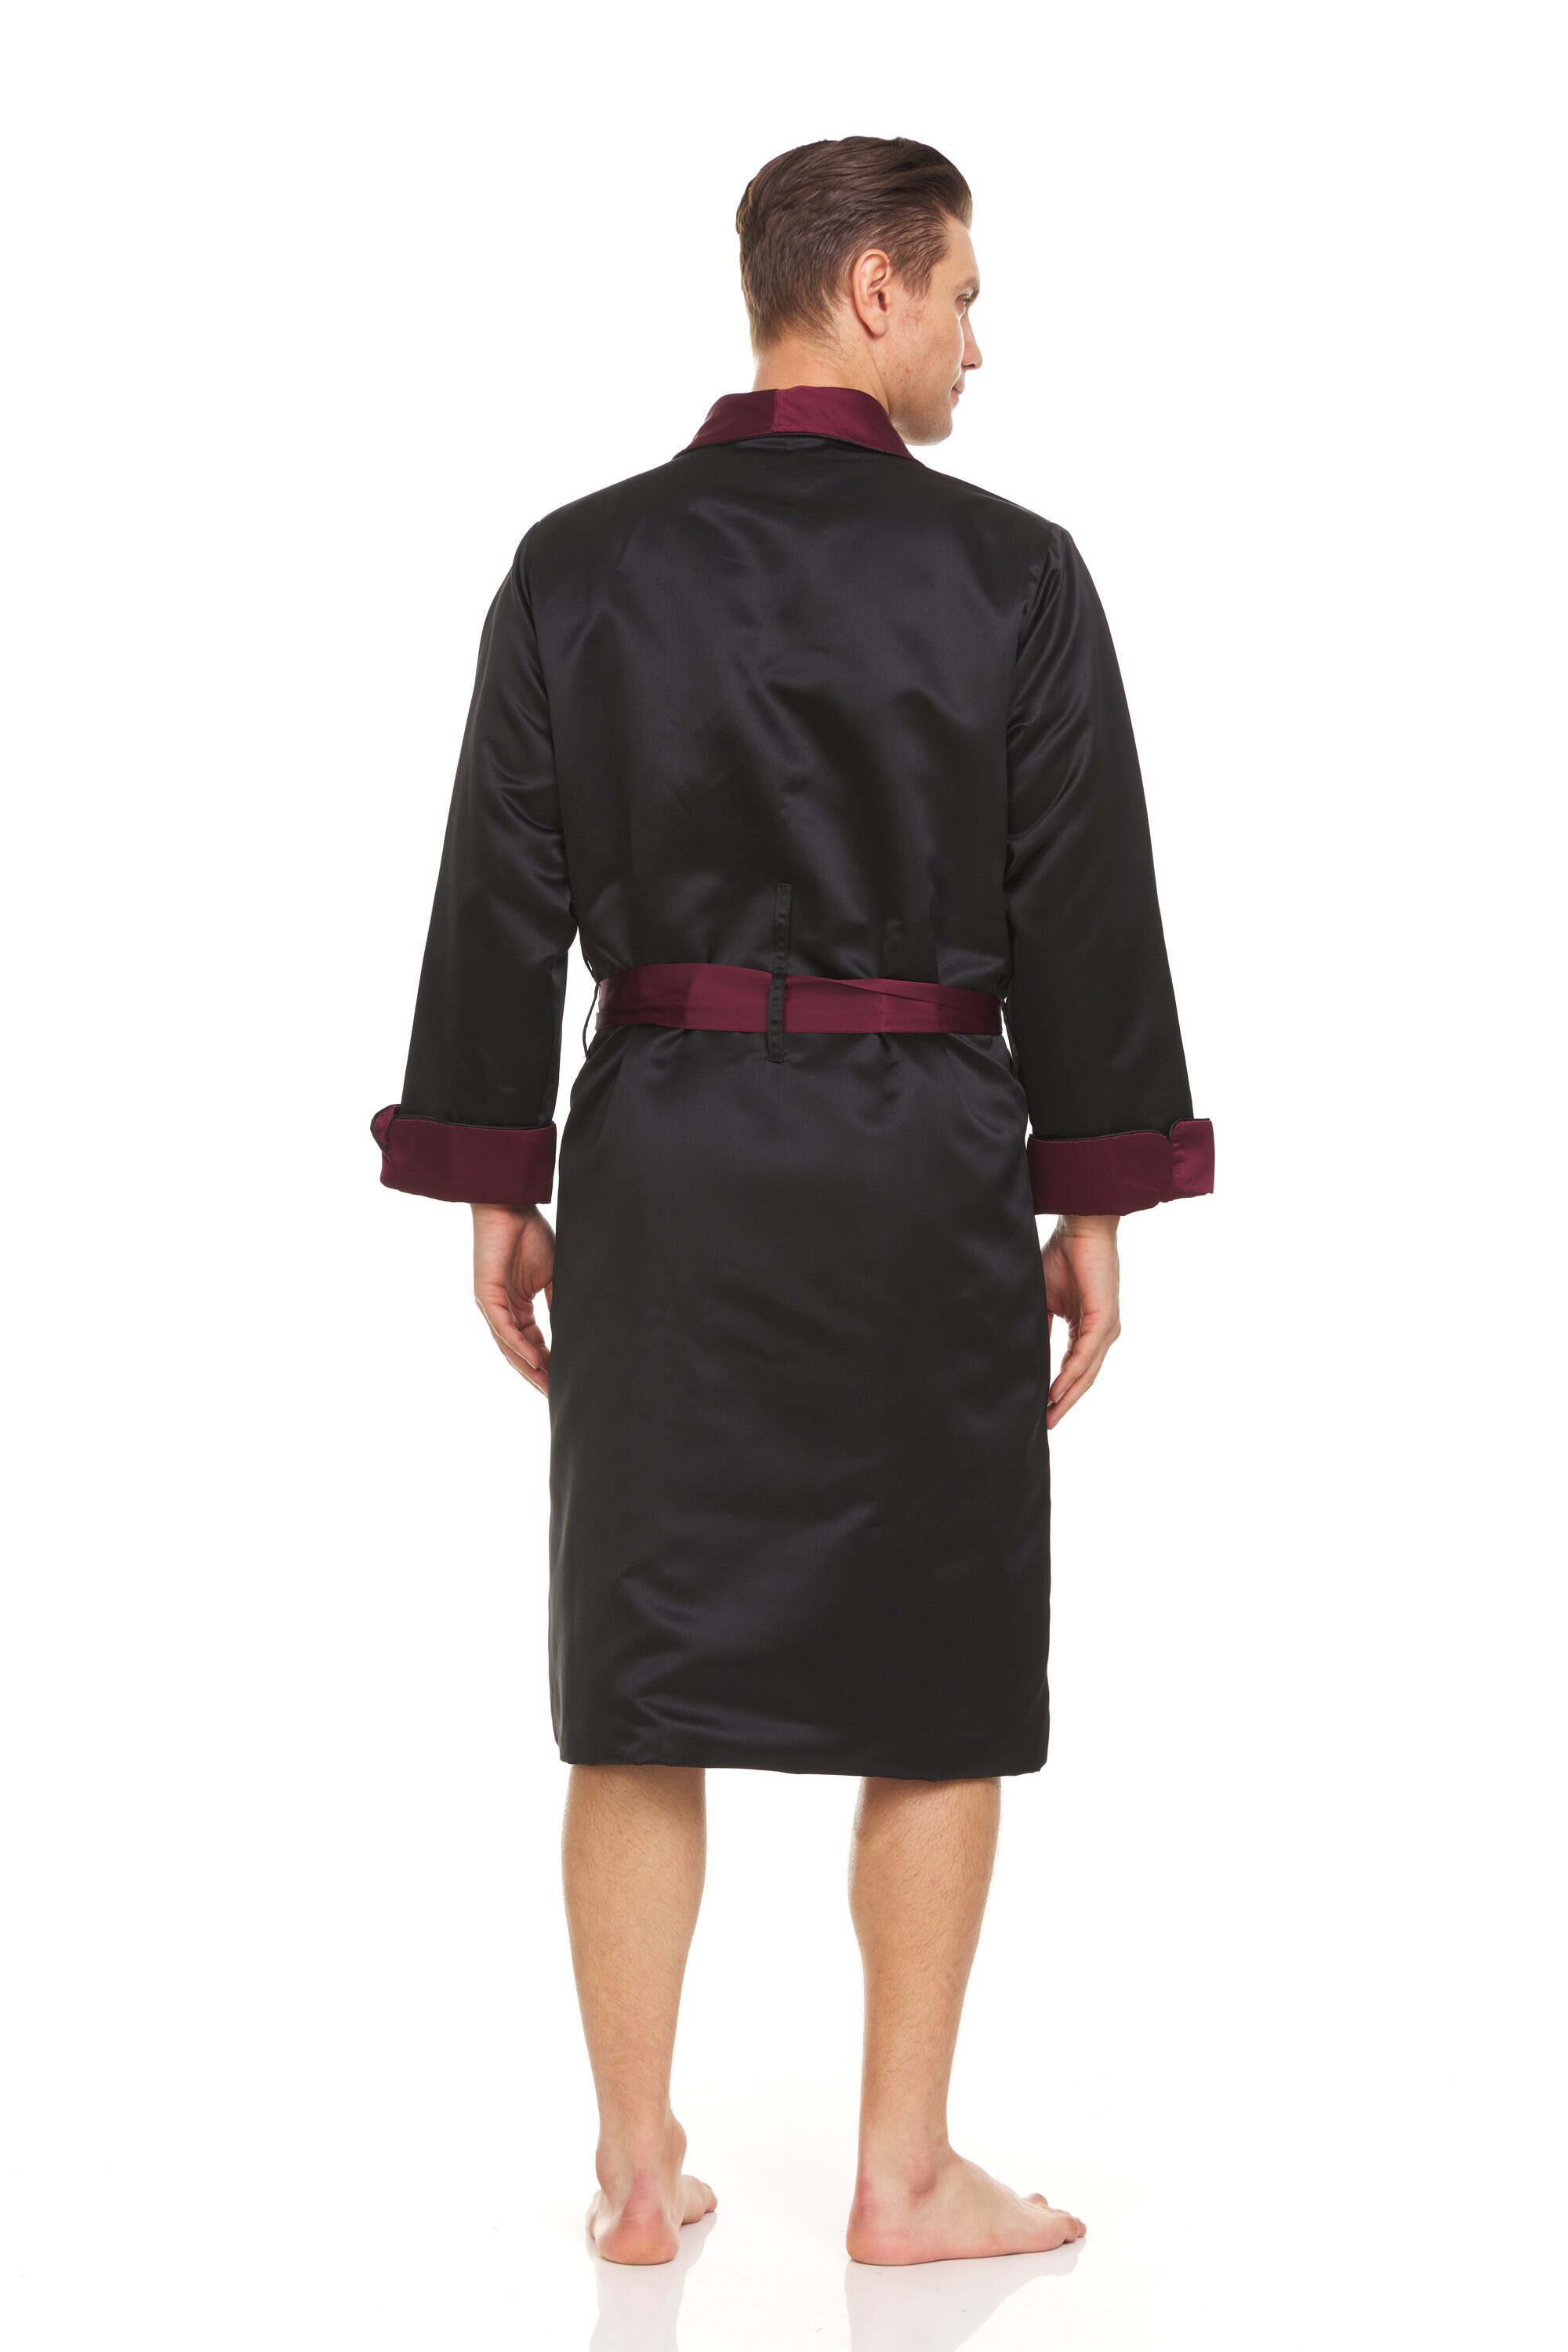 Mens Silk Satin Robe Heavy Weight Fully Lined BLACK / Burgundy 